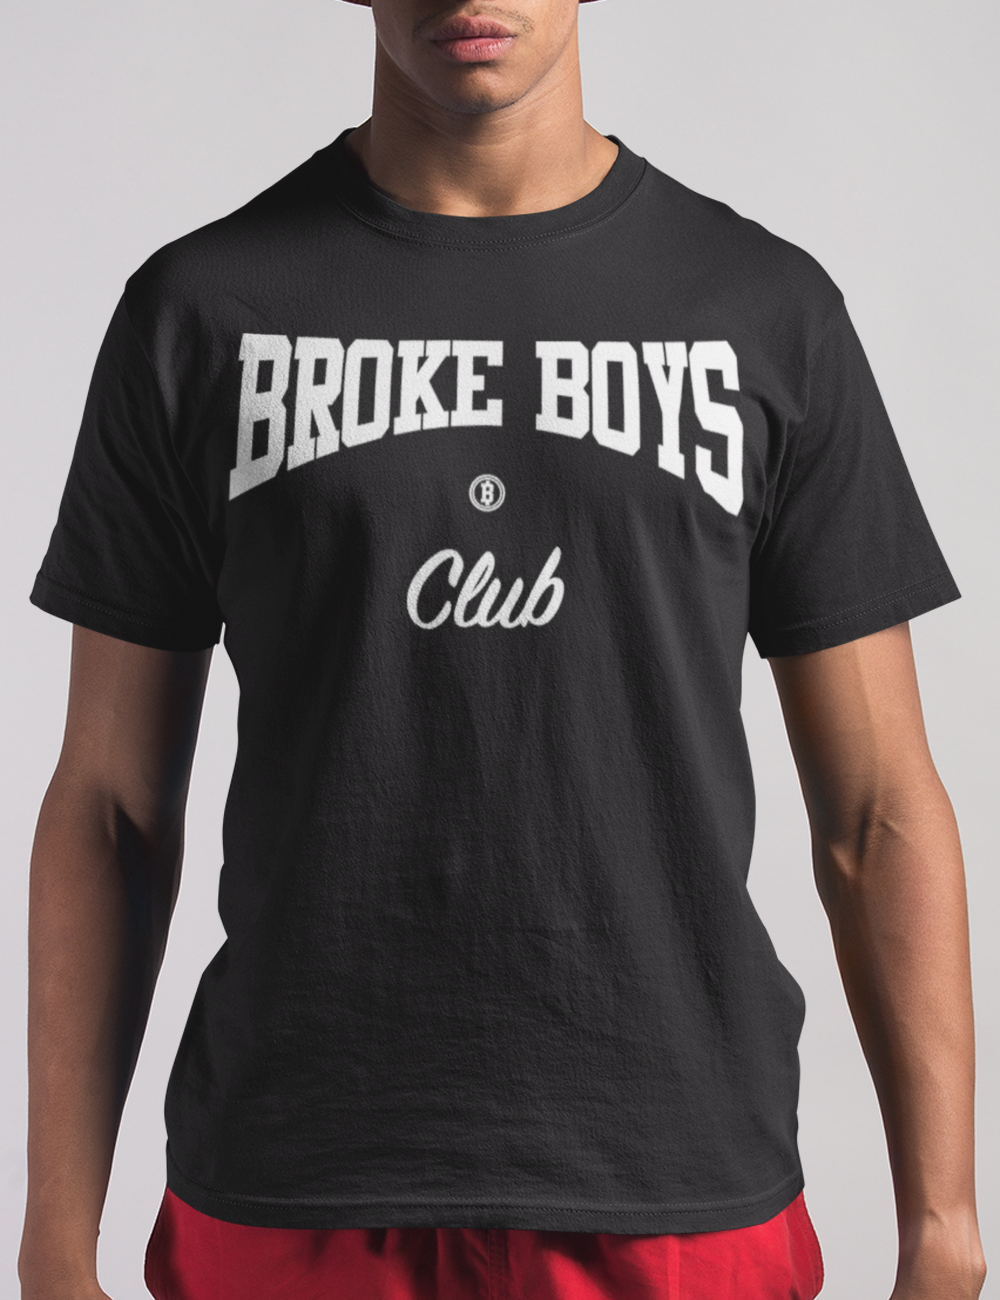 Broke Boys Club Men's Classic T-Shirt OniTakai